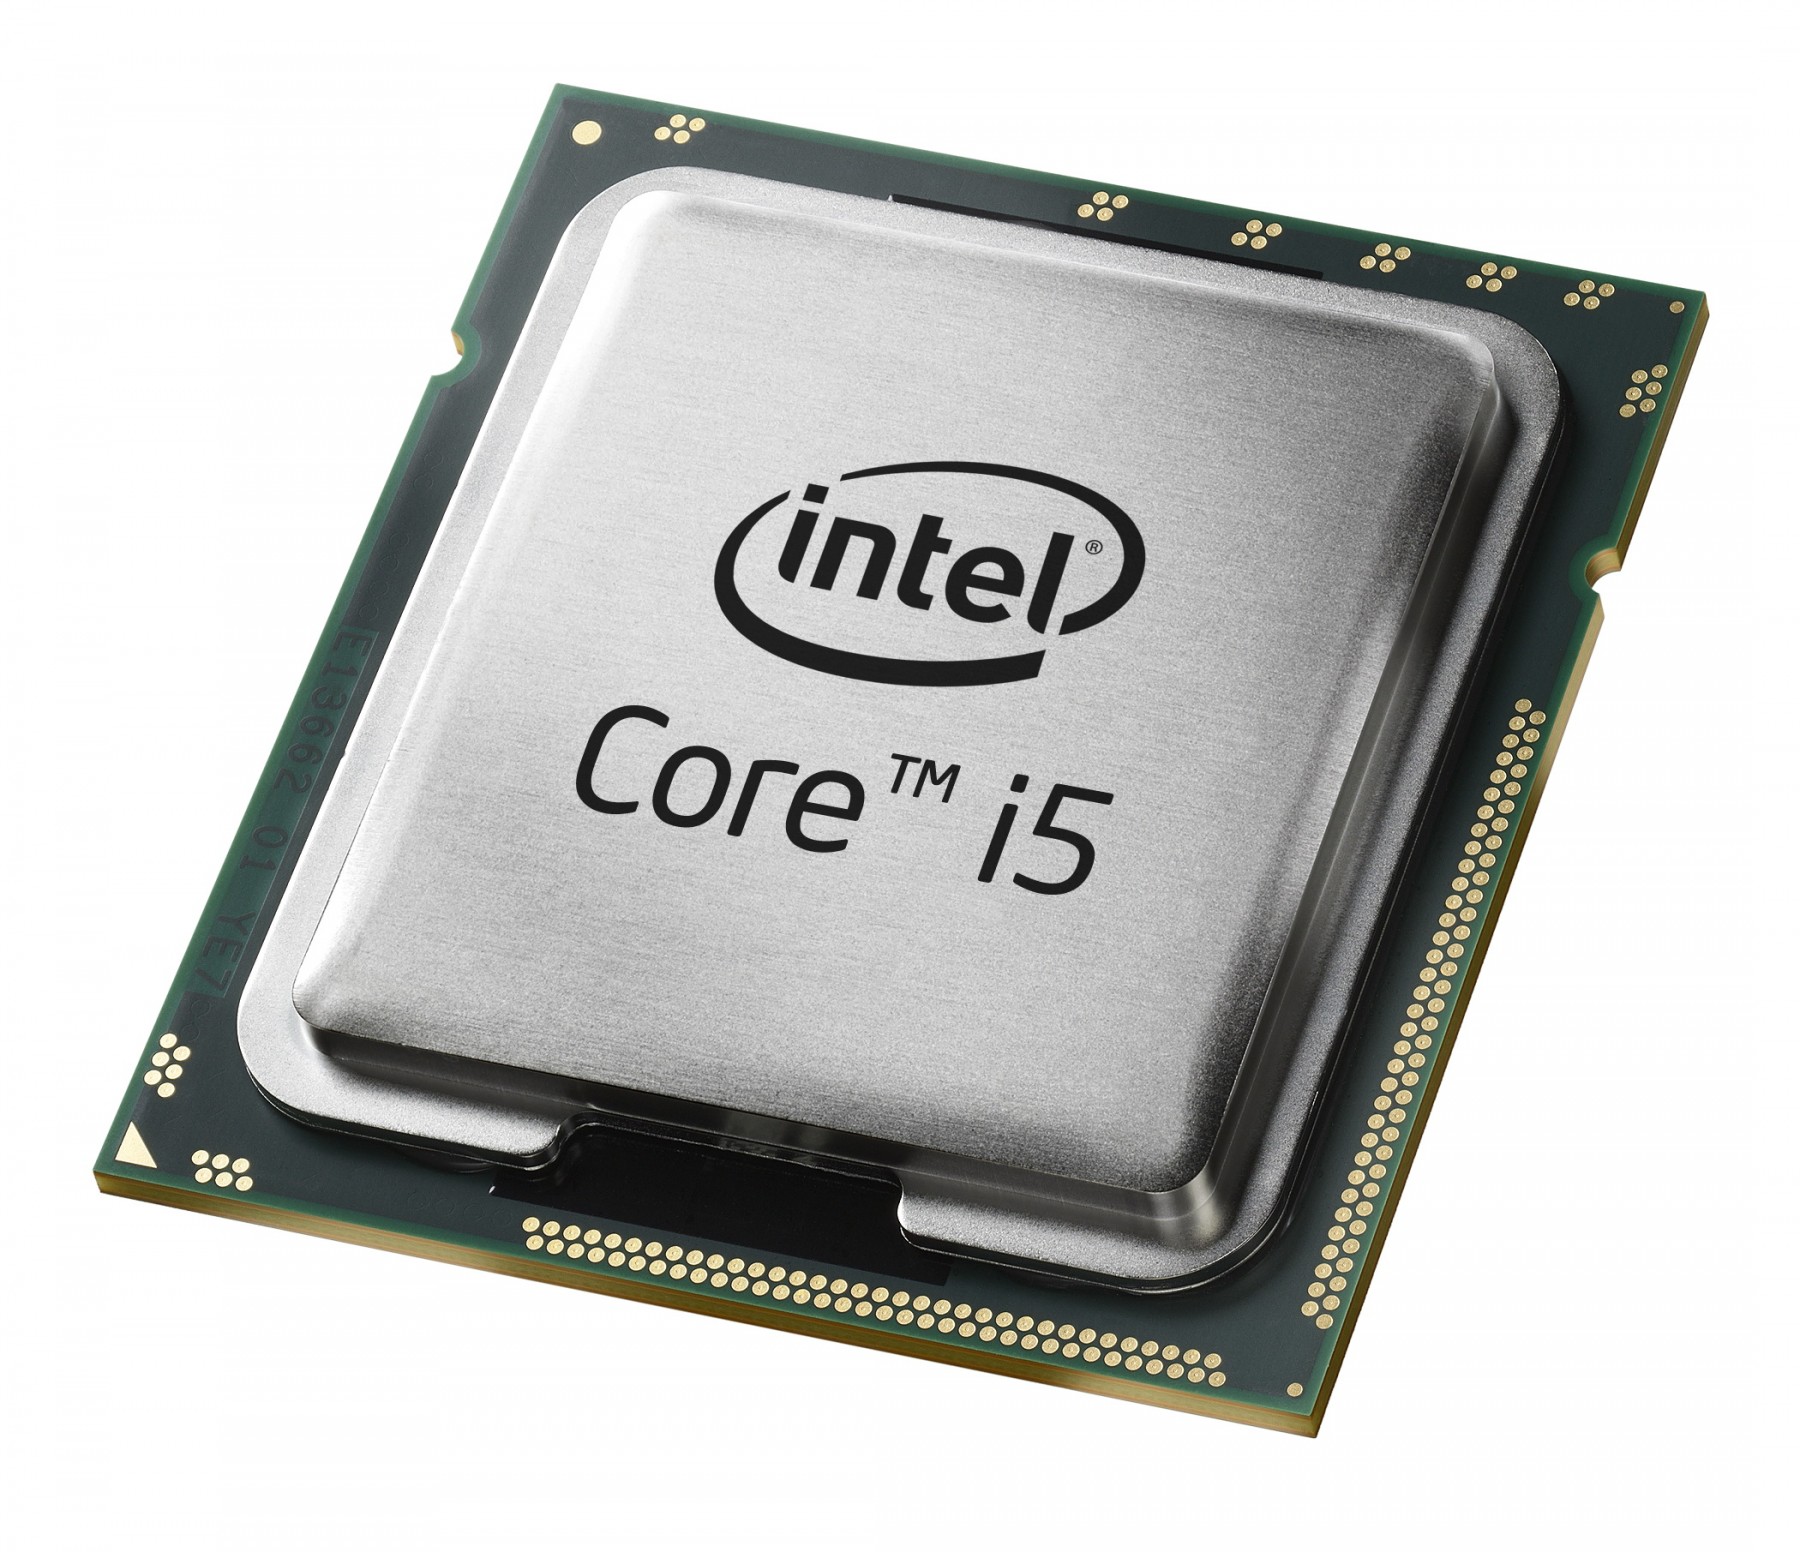 500030398-Intel Core i5-4300Y SR192 1.6Ghz 5GT/s BGA 1168 Processor-image